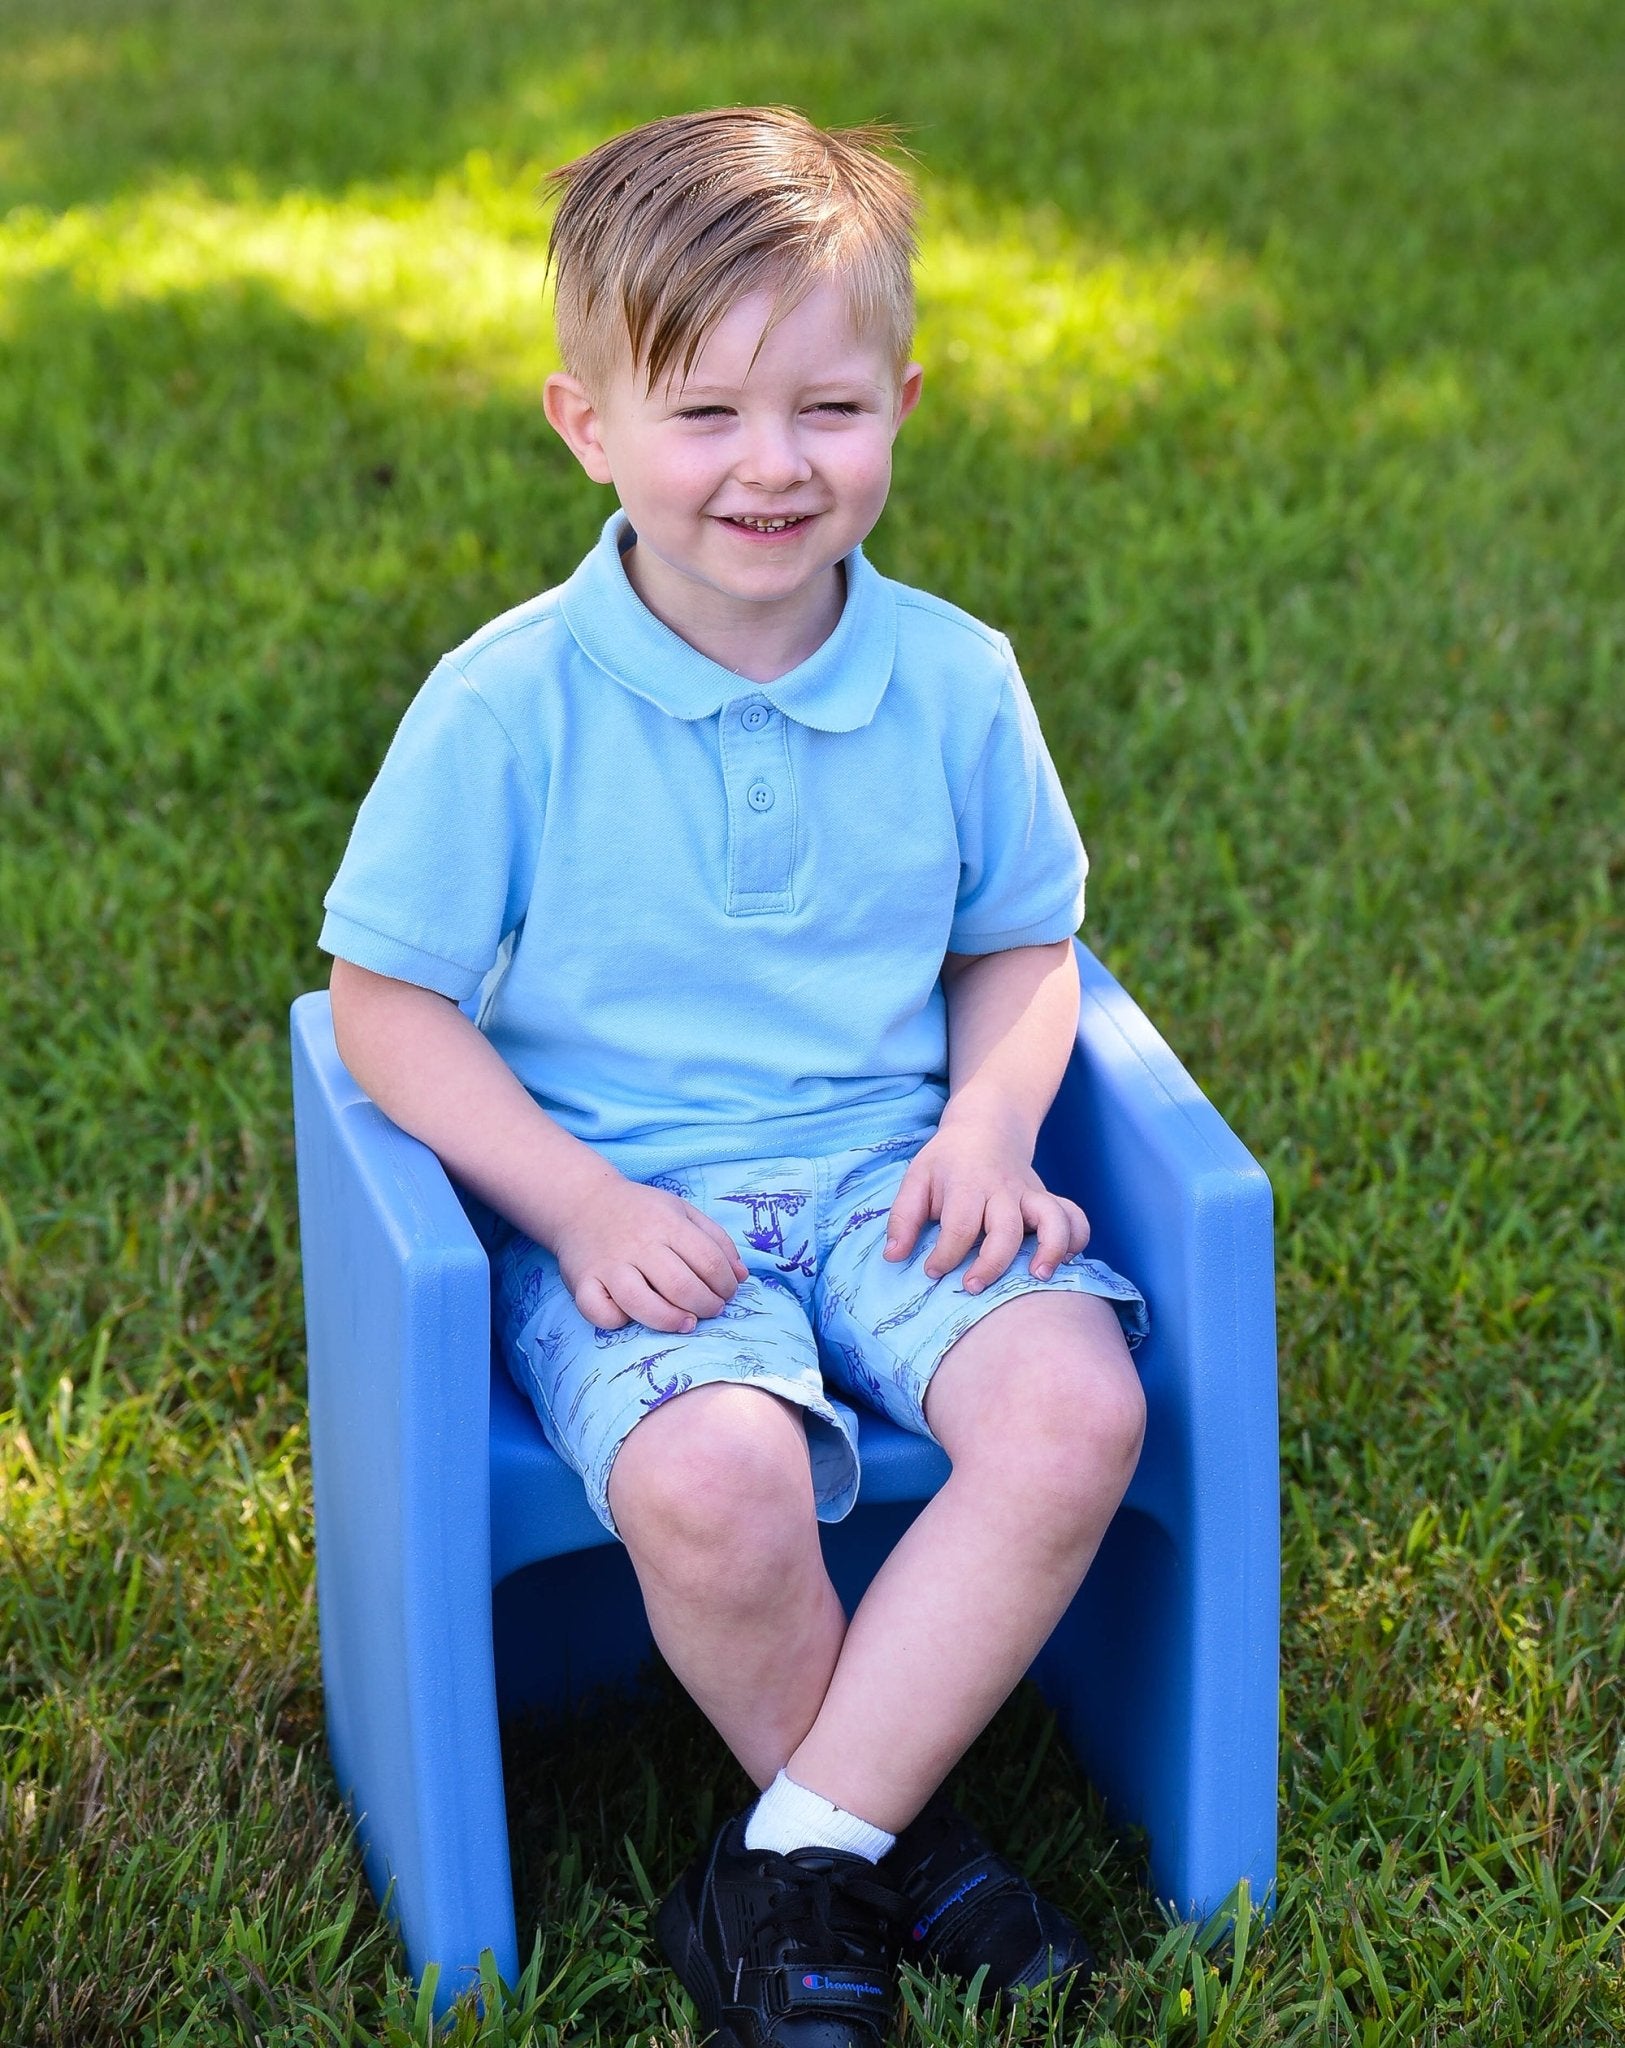 Children's Factory Cube Chair - Sky Blue (CF910-013) - SchoolOutlet